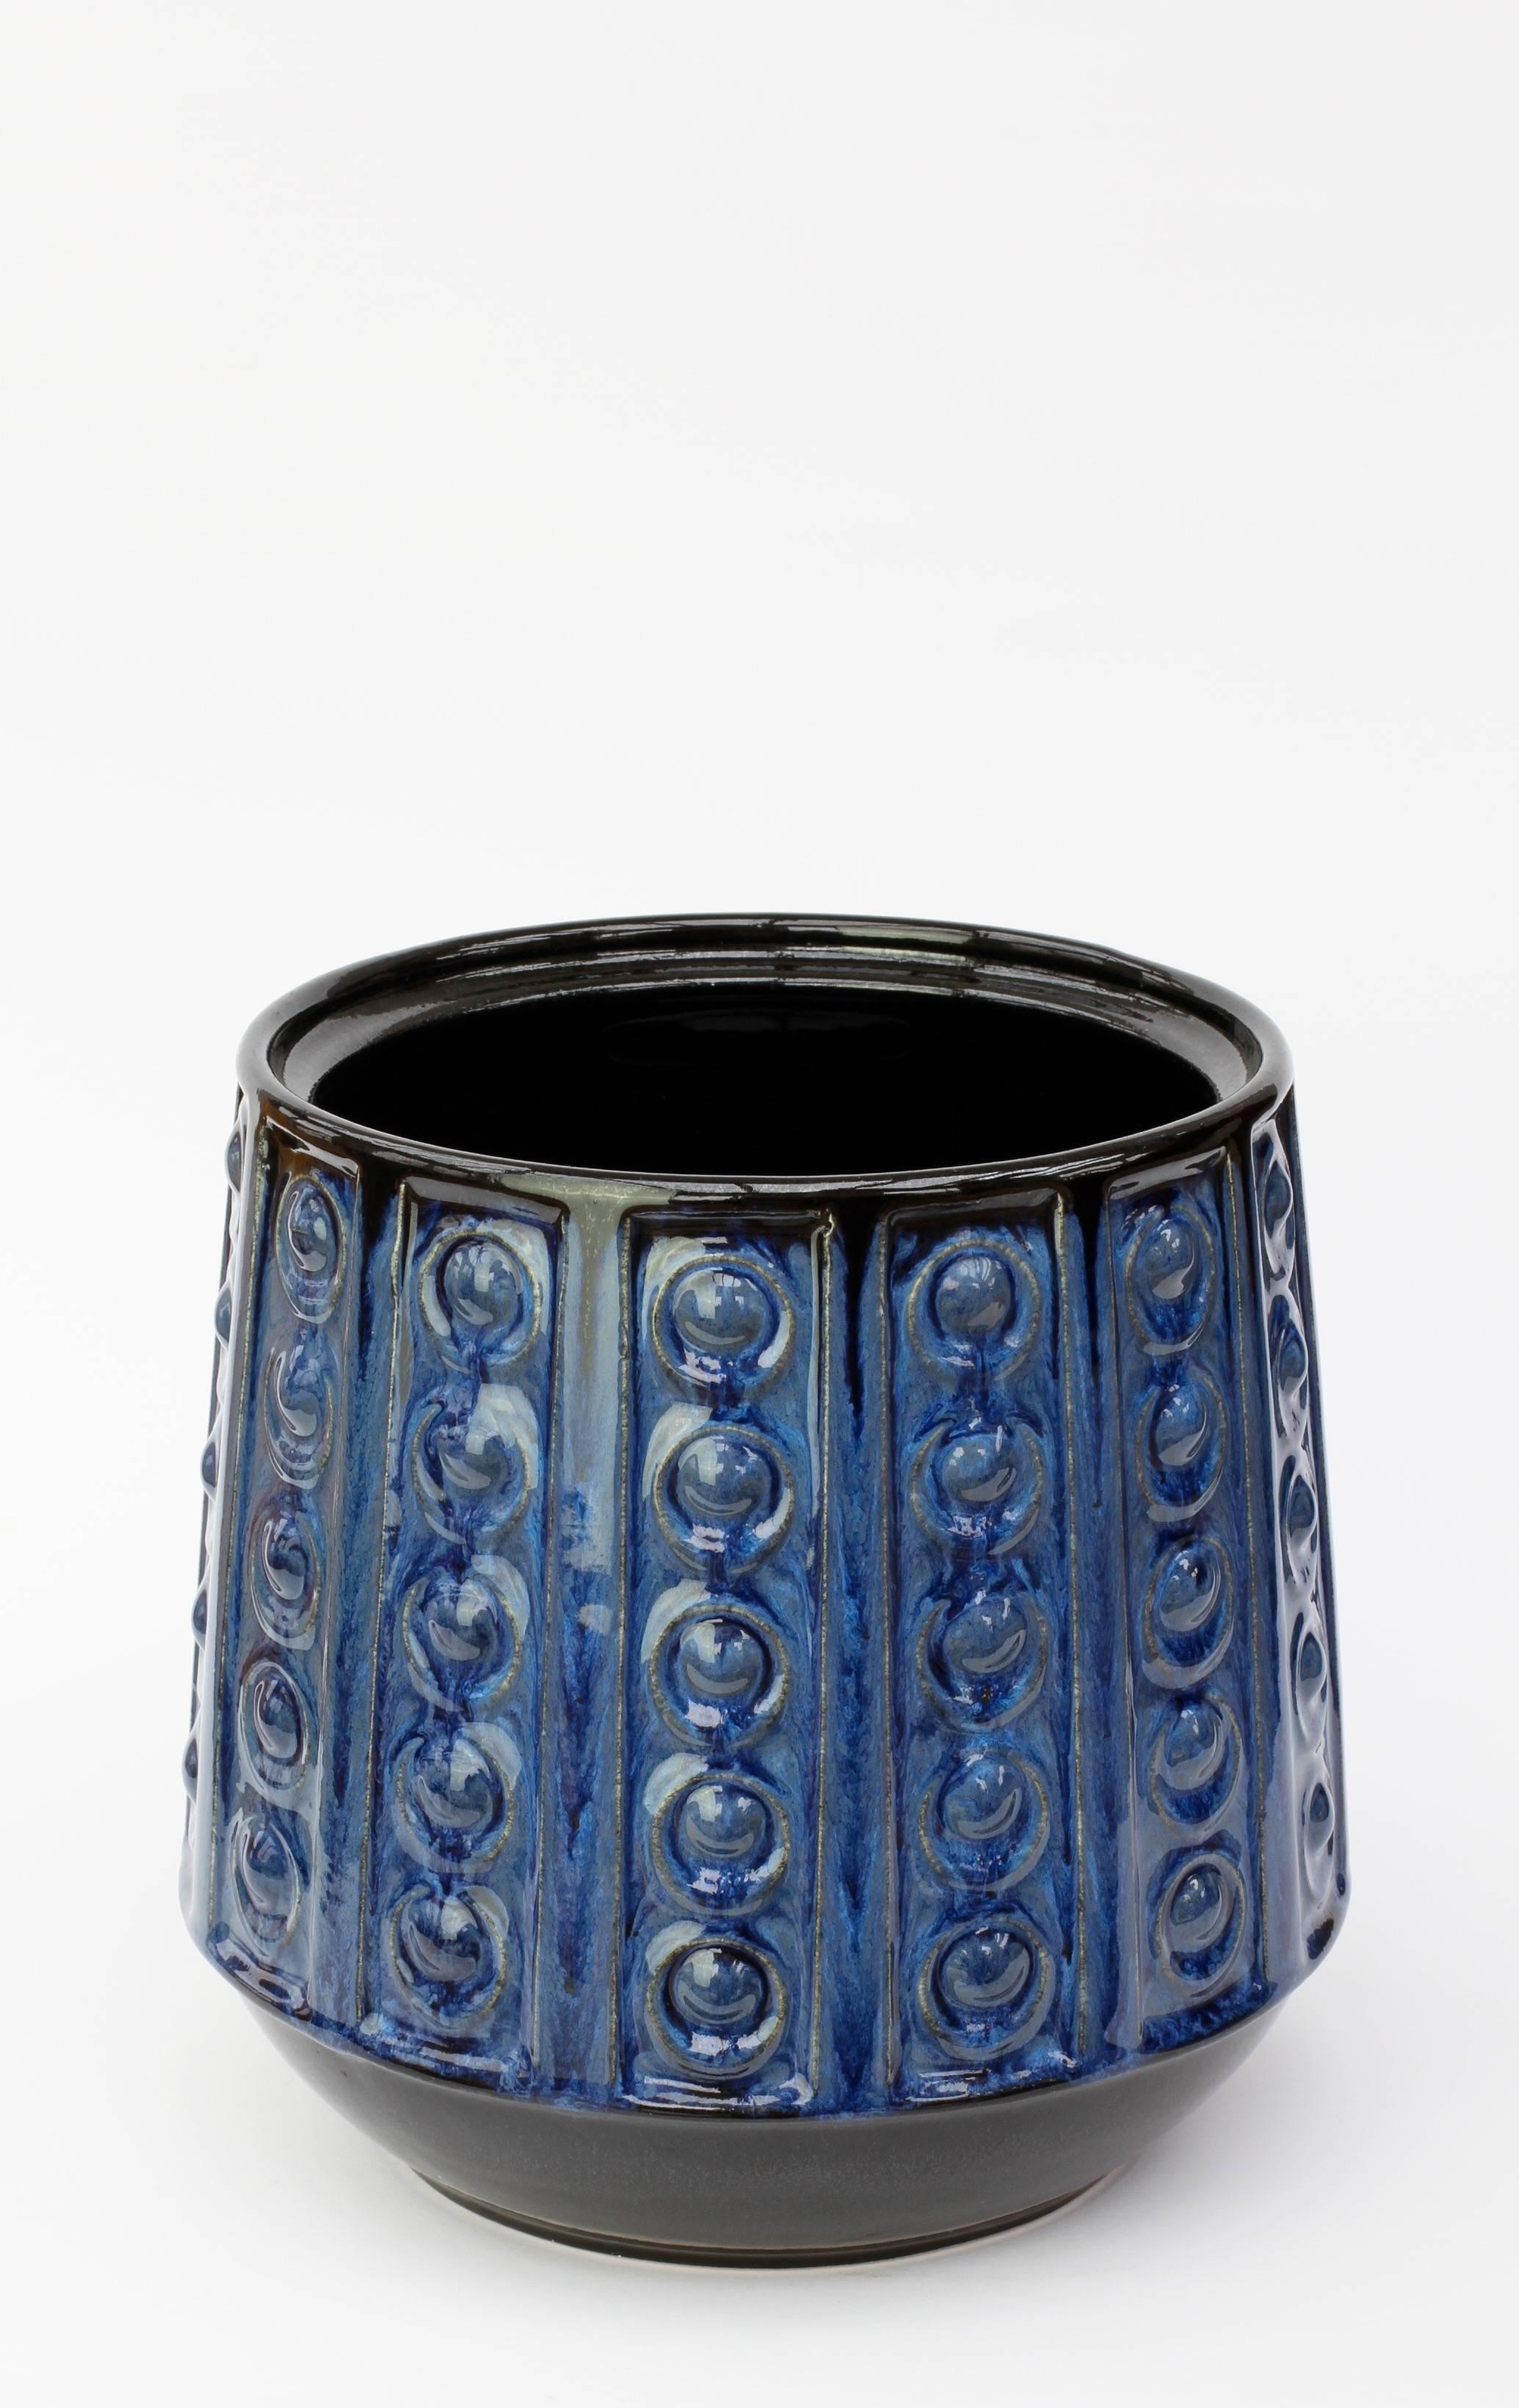 Glazed Textured Blue Mid-Century West German Vase or Pot by Jasba Pottery, circa 1970